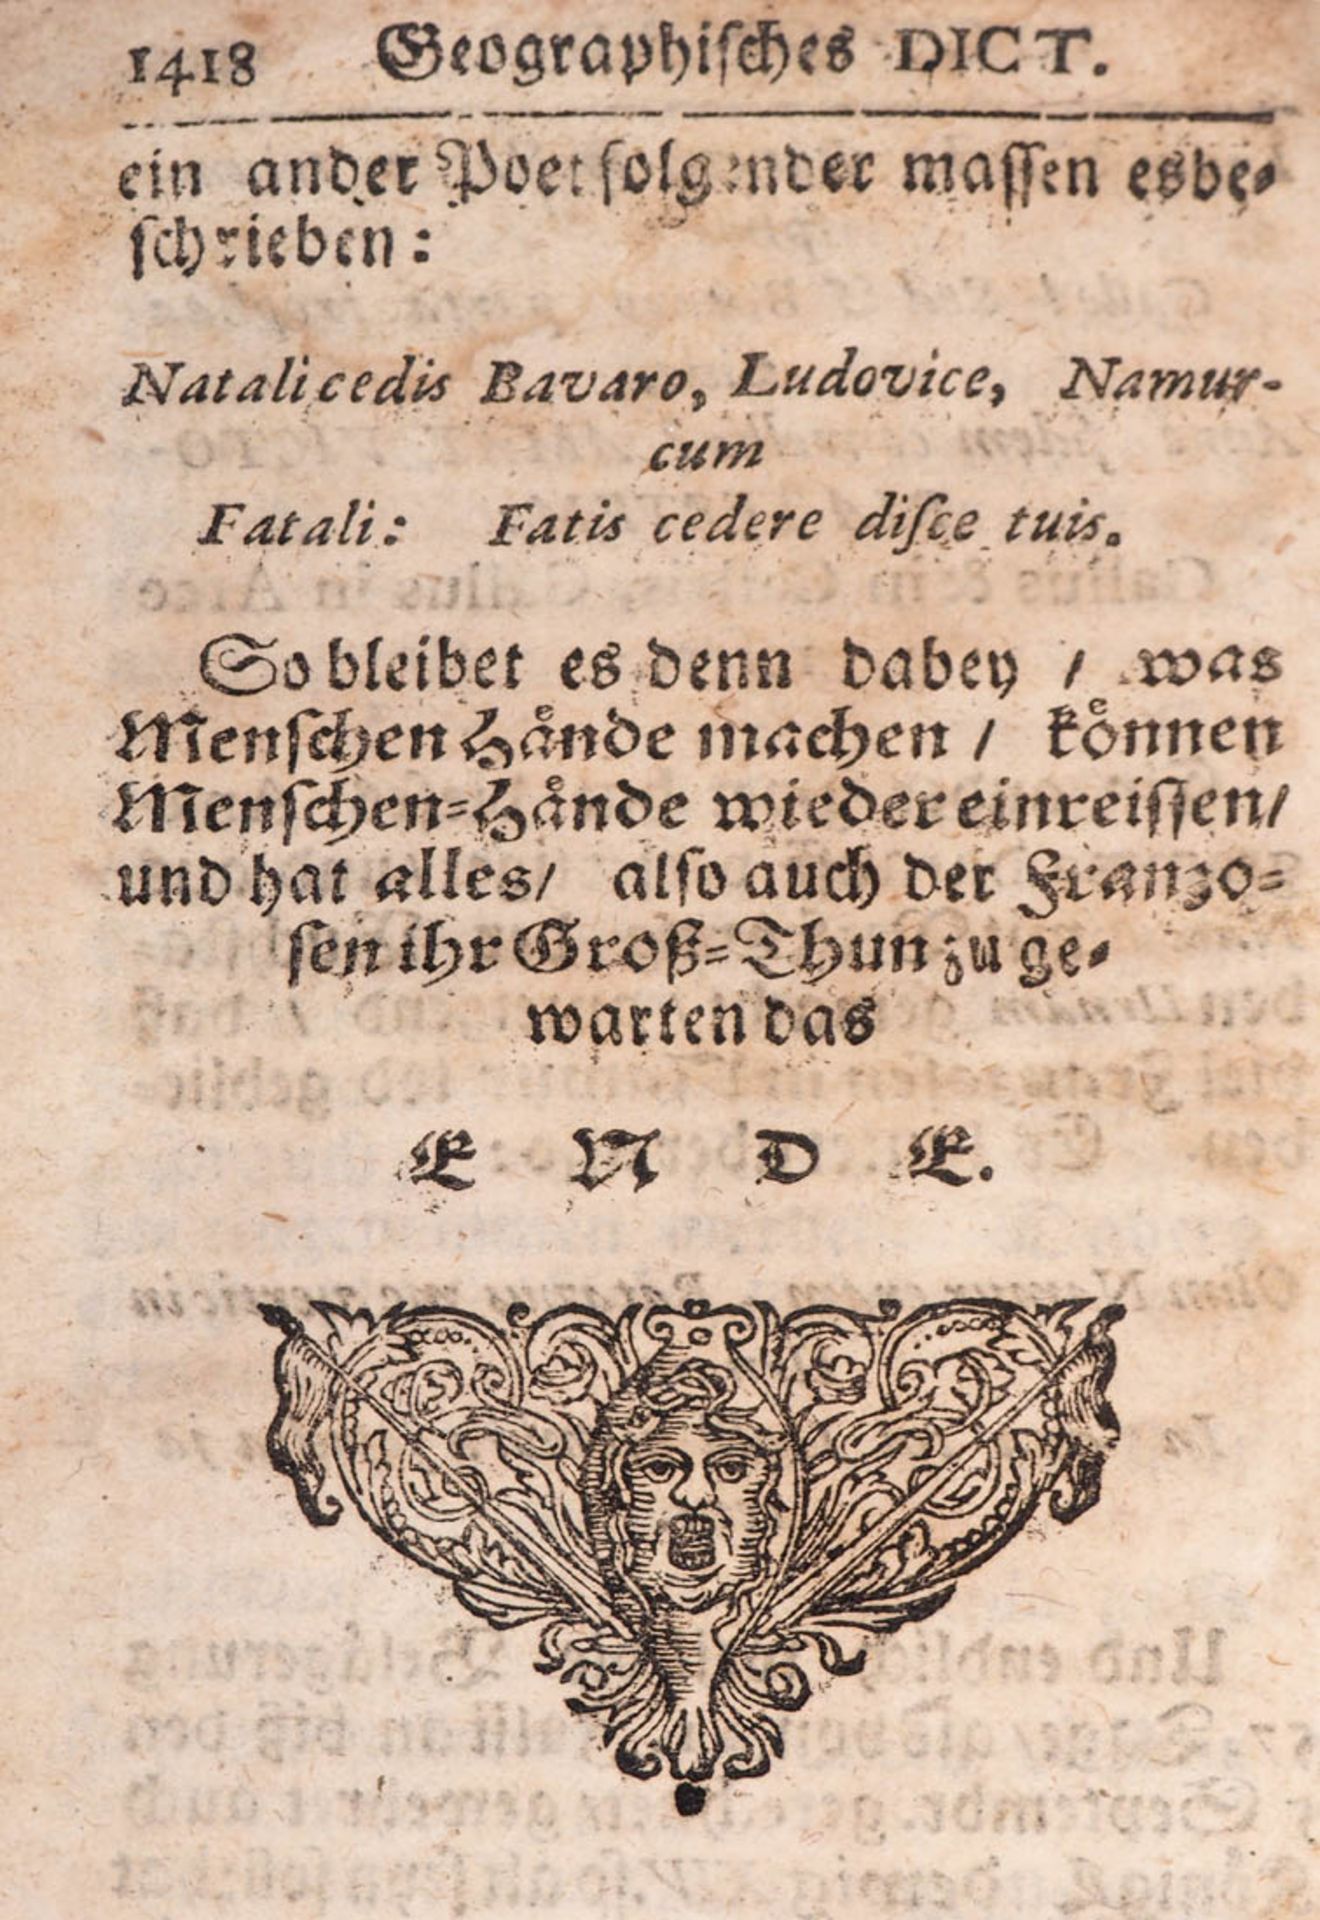 Hieronymus Dicelius, 1696, Geographisches Dictionarium "Geographisches Dictionarium, darinnen die - Bild 4 aus 4